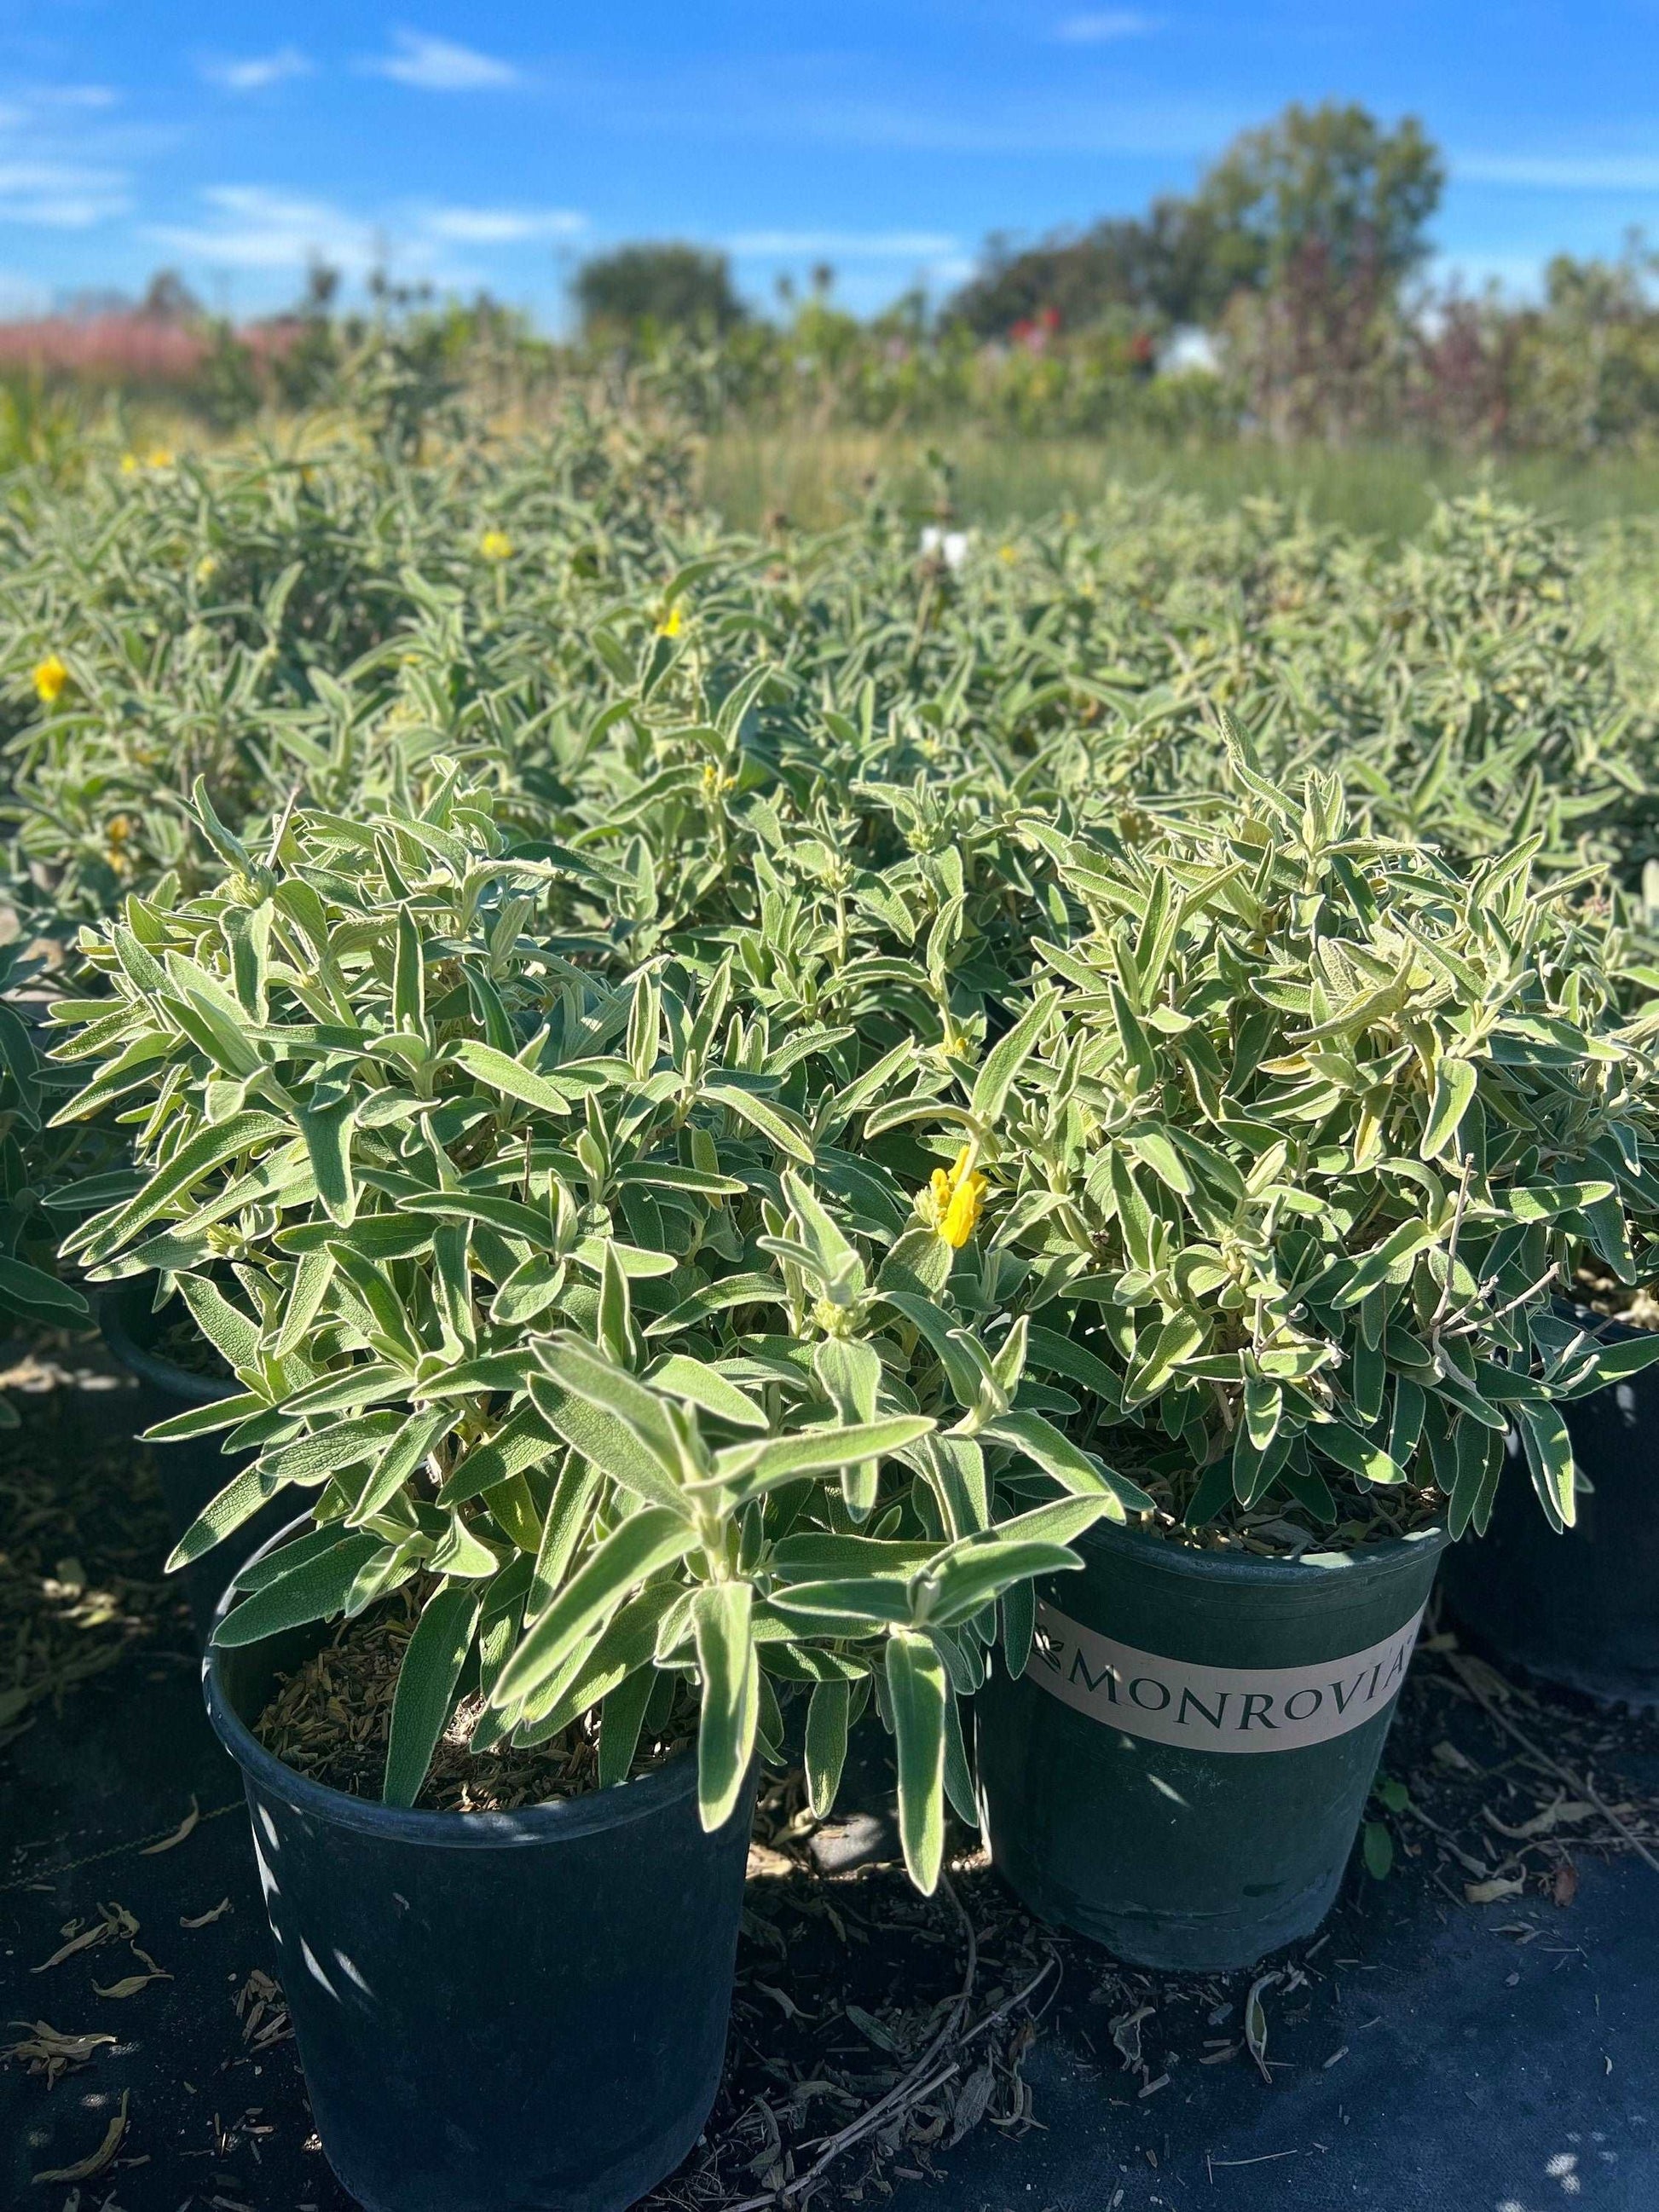 Jerusalem Sage Phlomis Fruticosa Plant One Gallon Healtny Harvesters